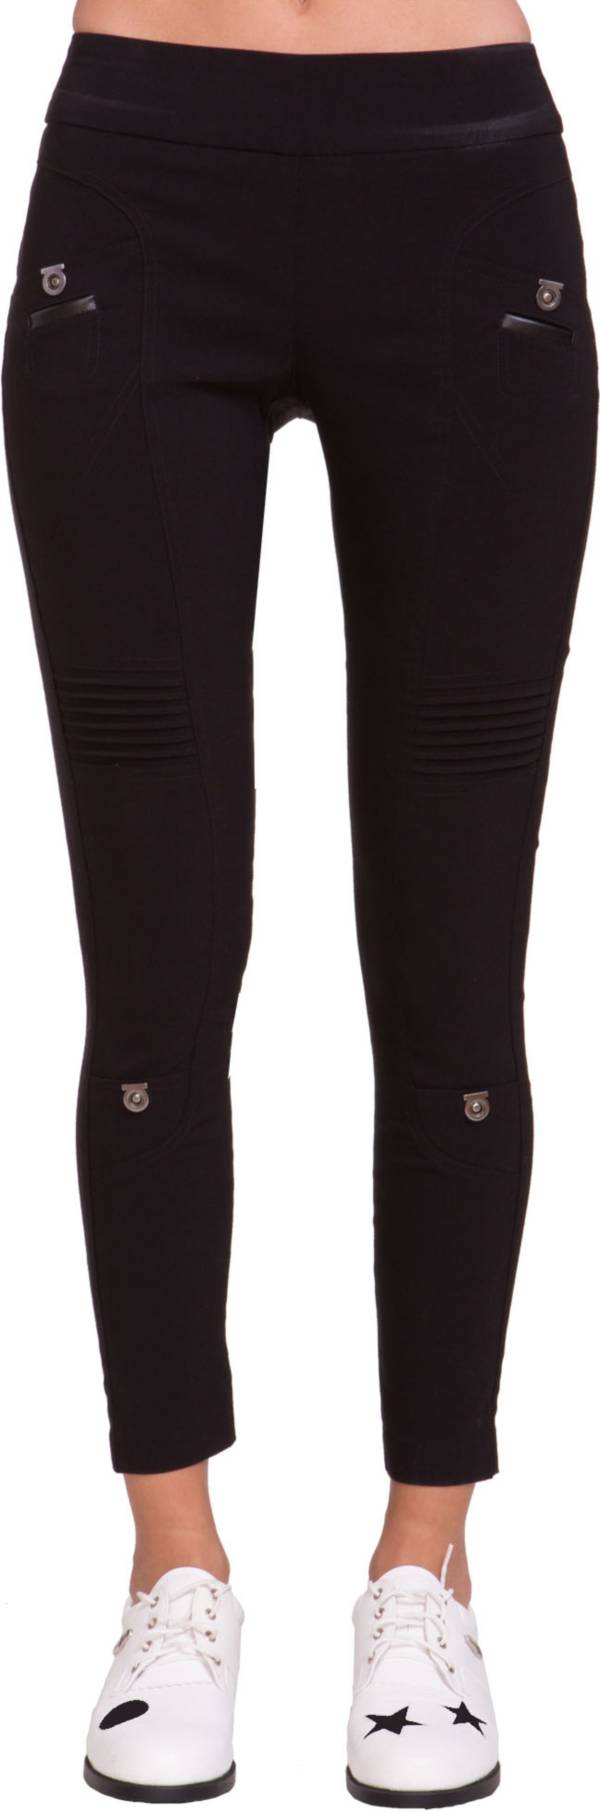 Jamie Sadock Women's Skinnylicious Pull-On Ankle Pants product image